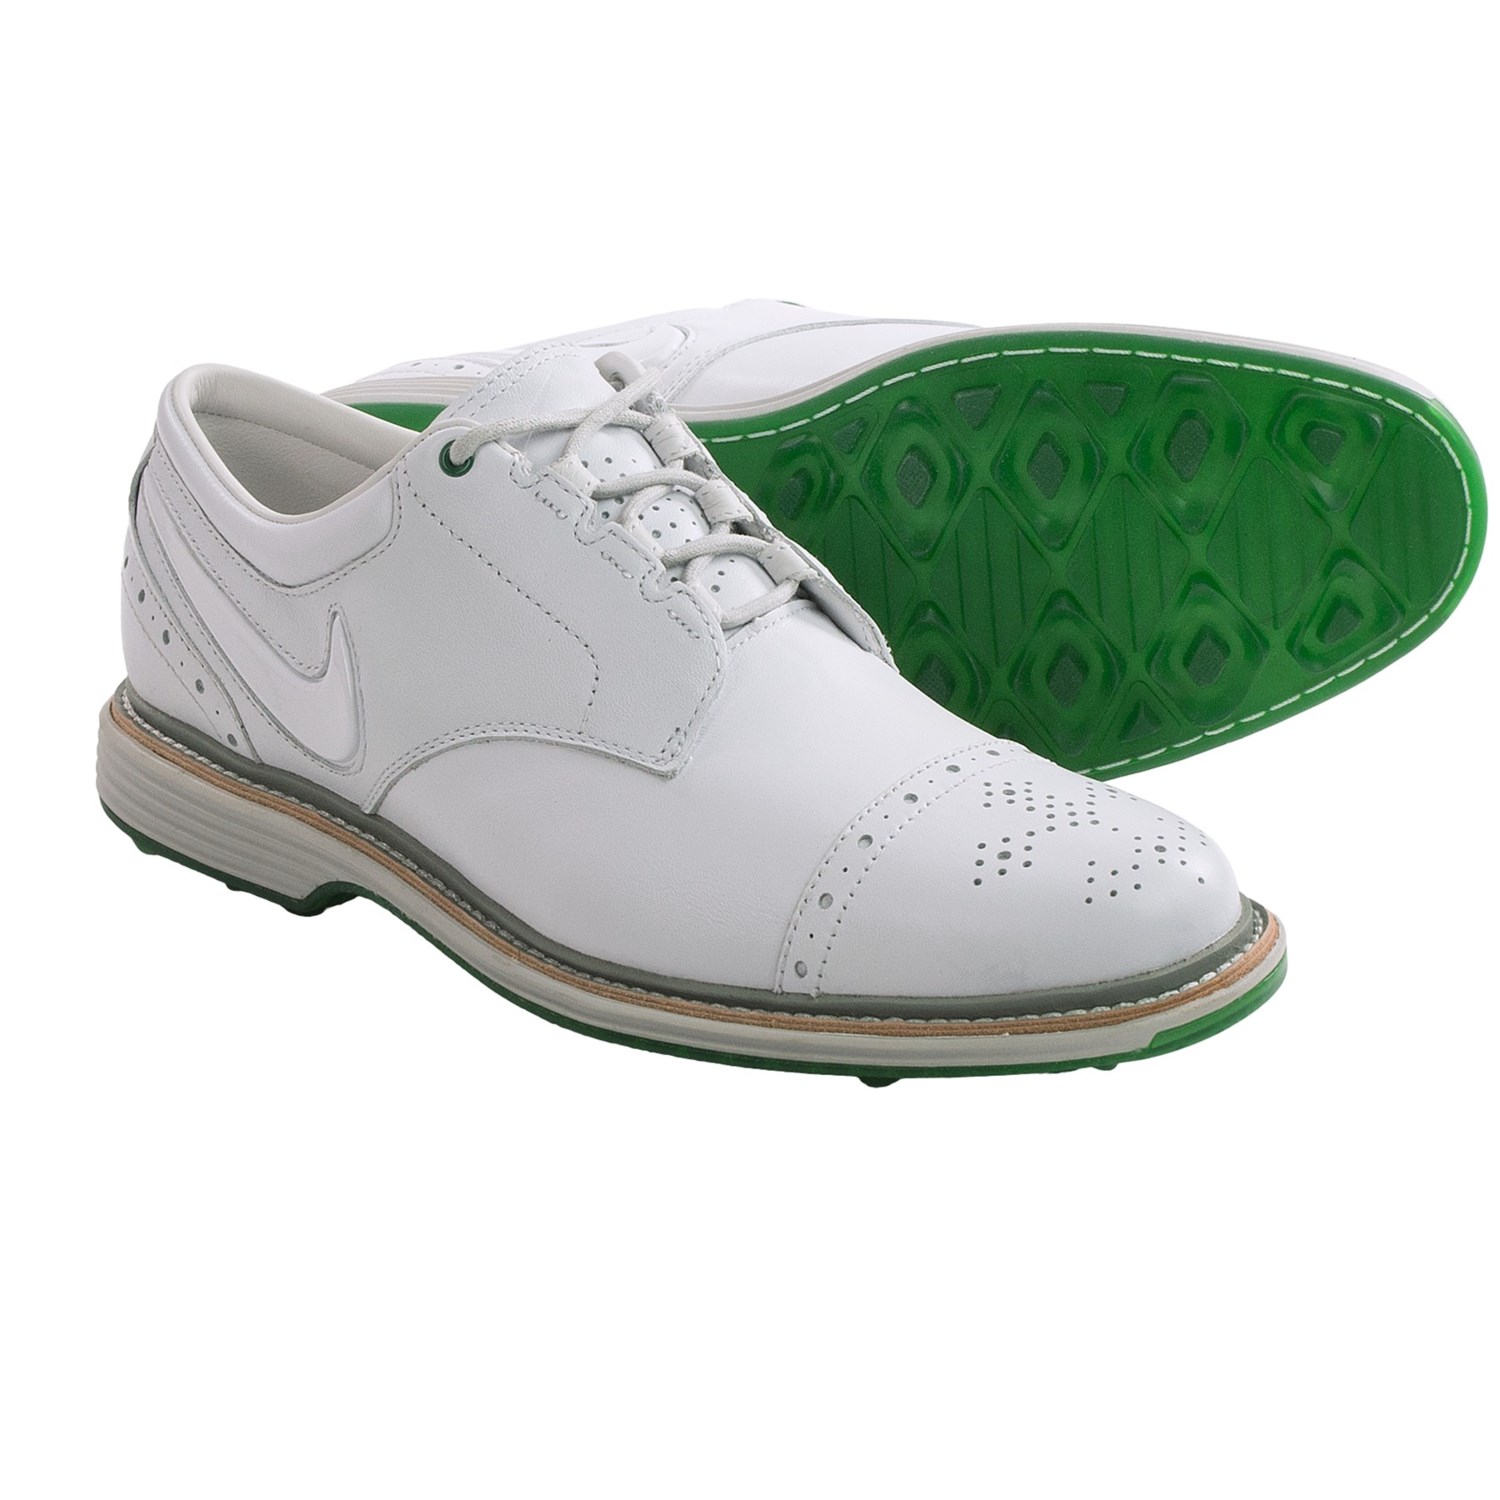 Nike Golf Shoes For Men 46